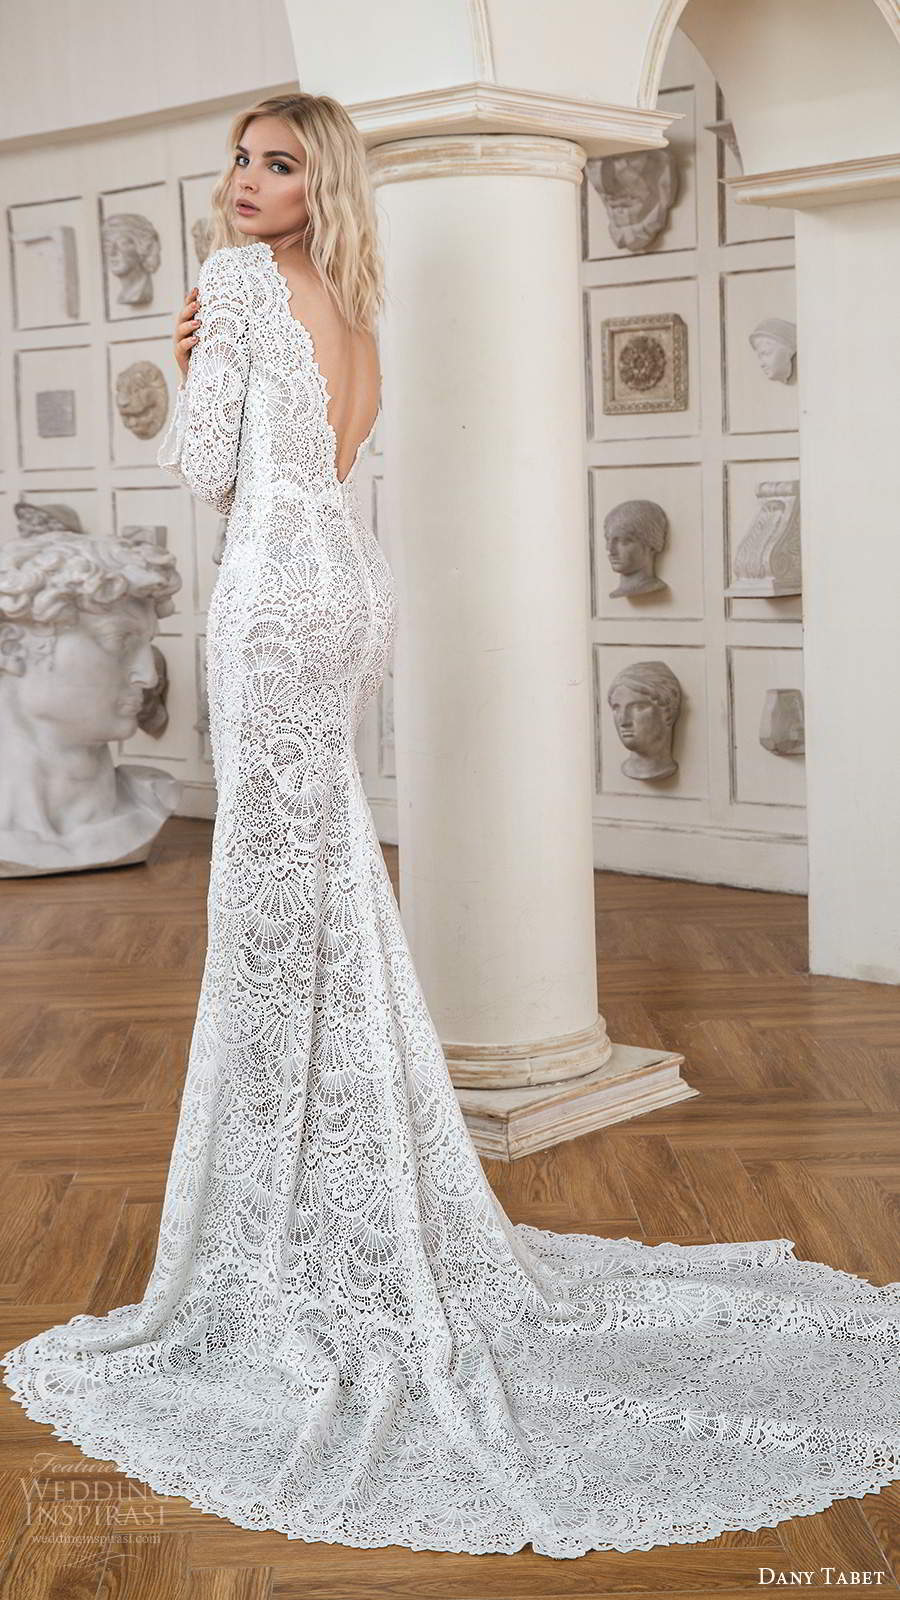 dany tabet 2020 bridal long sleeves plunging v neckline fully embellished lace sheath wedding dress v back chapel train (7) bv